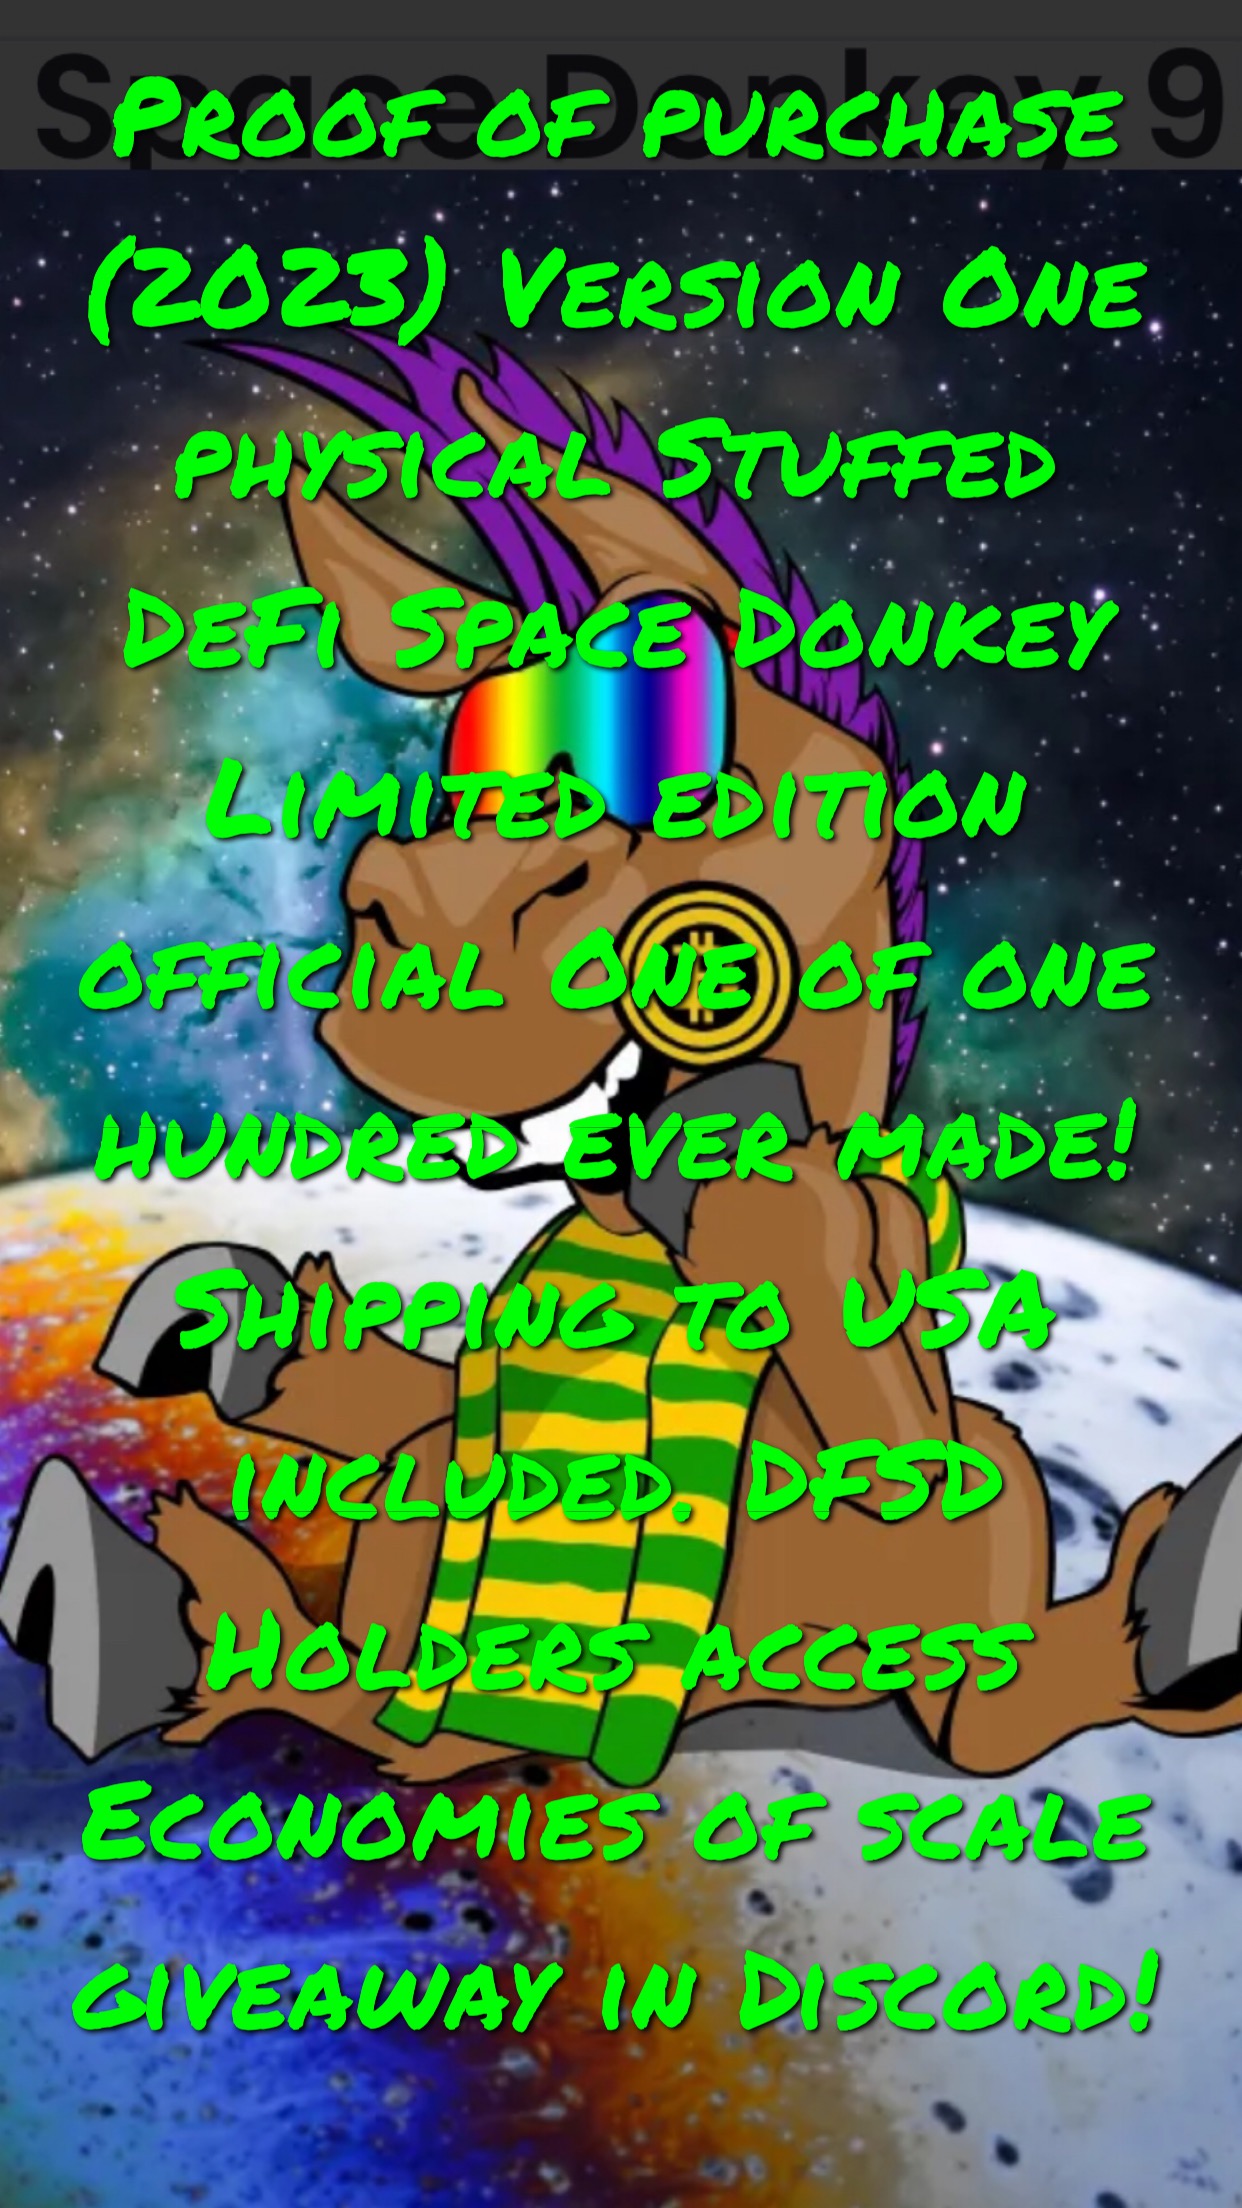 One "Tricky" the DeFi Space Donkey stuffed plushie